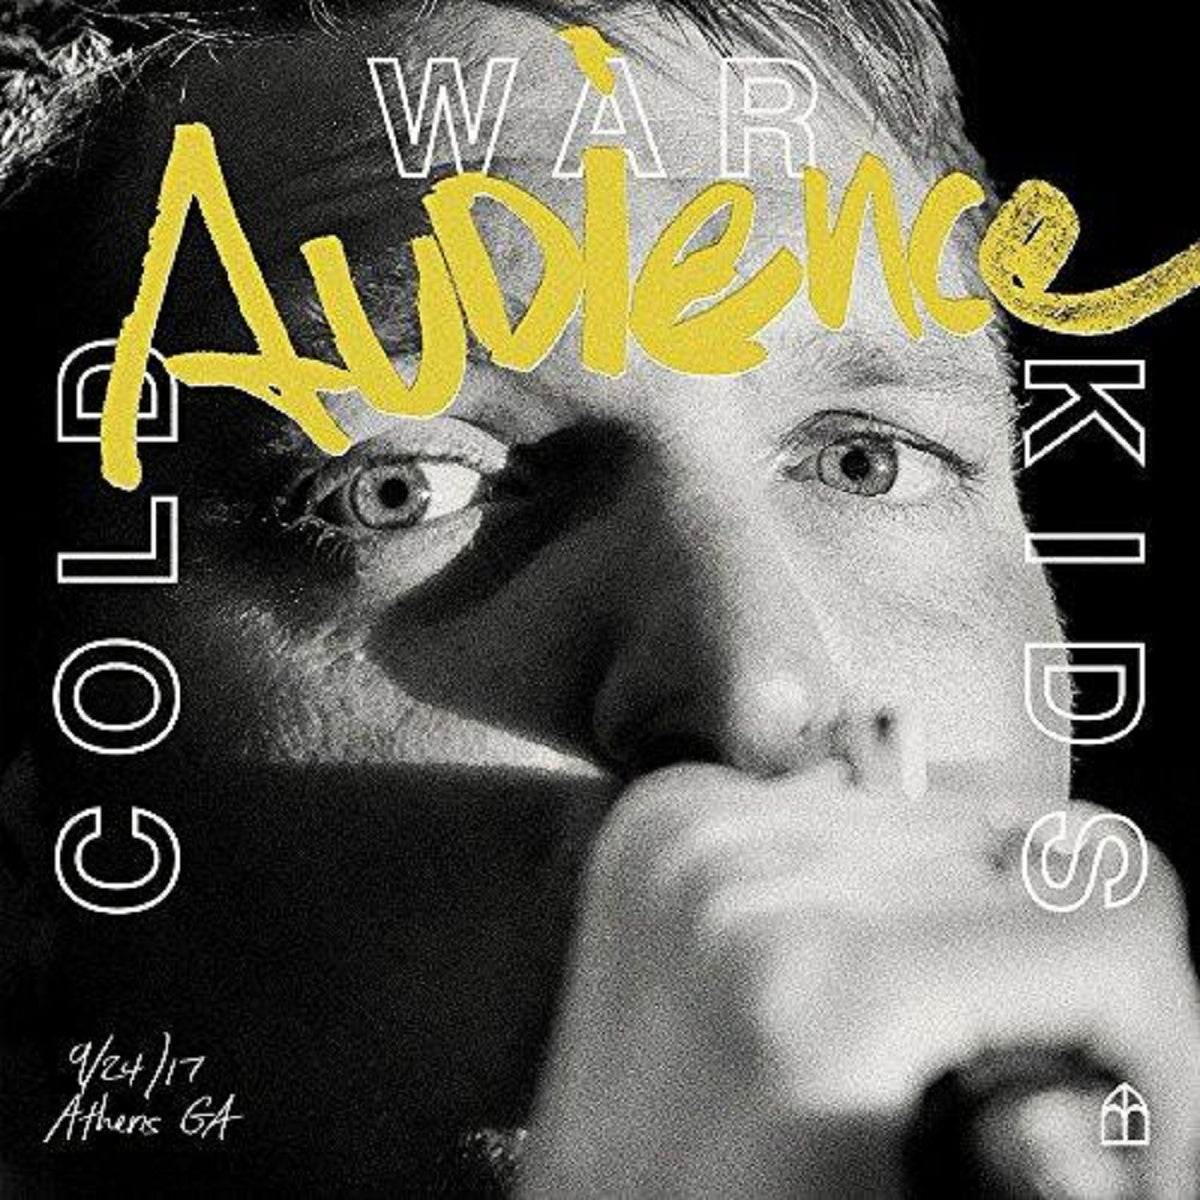 Cold War Kids - Audience - BROKEN 8 RECORDS